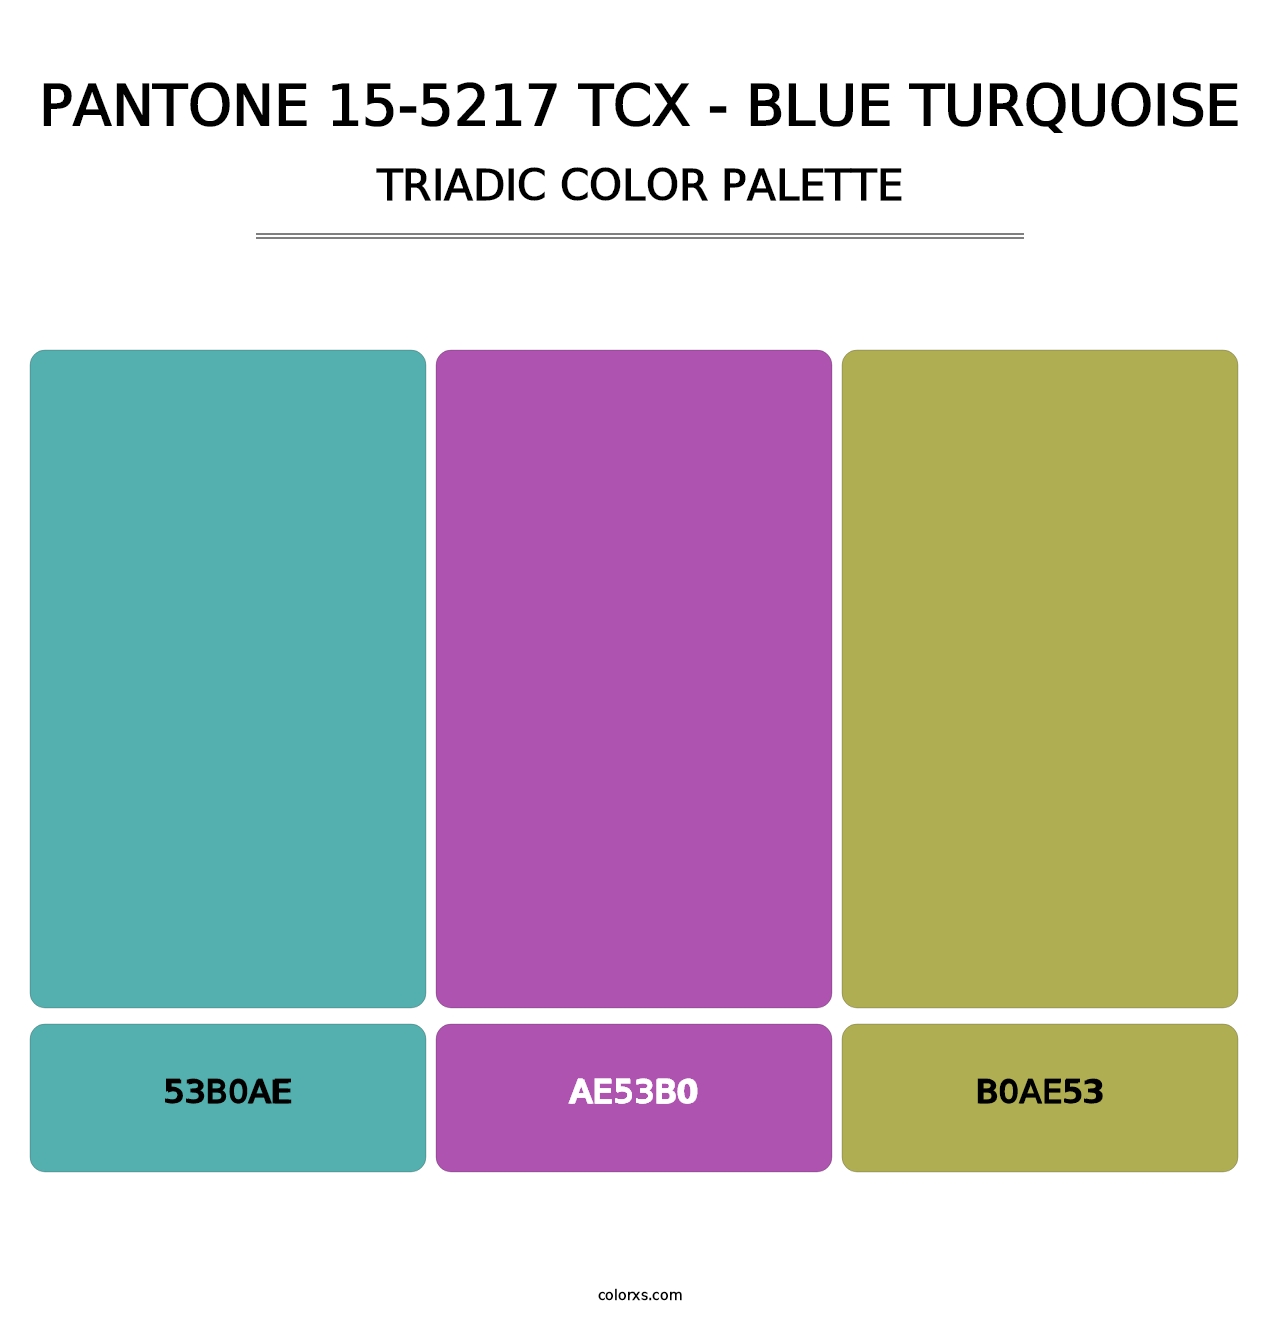 PANTONE 15-5217 TCX - Blue Turquoise - Triadic Color Palette